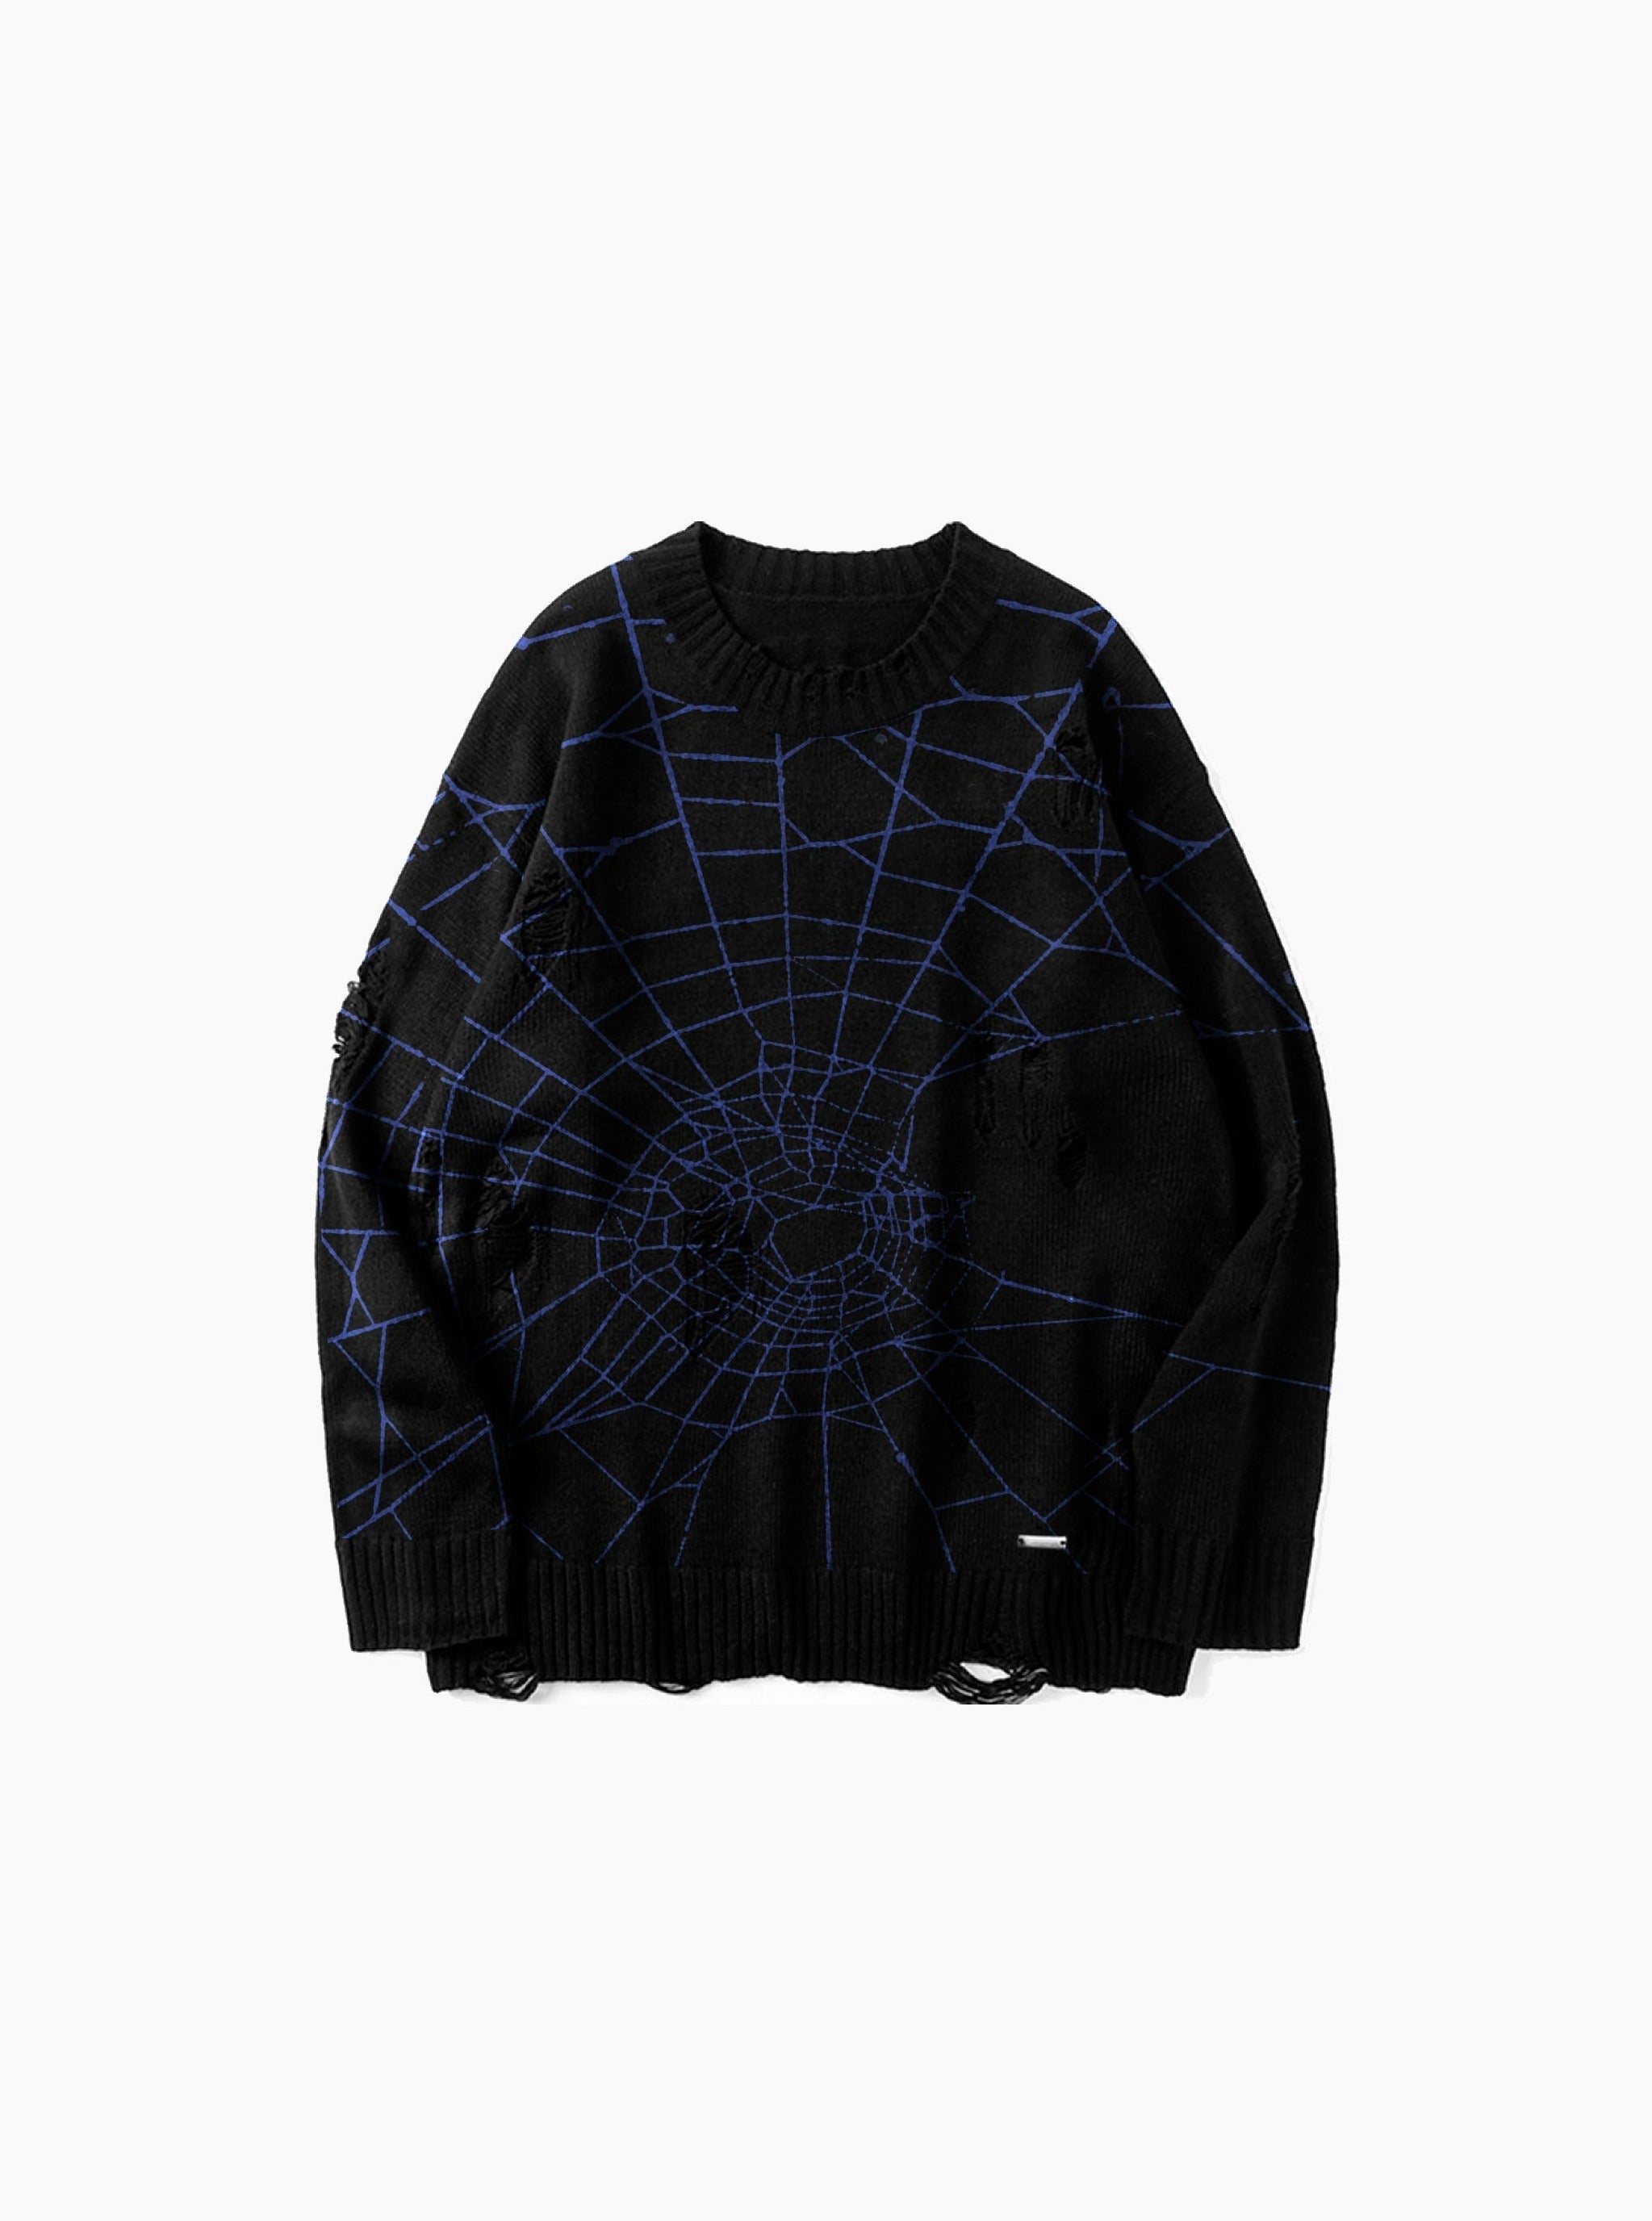 Sole et. Al Dark Web Distressed Strik Sweater